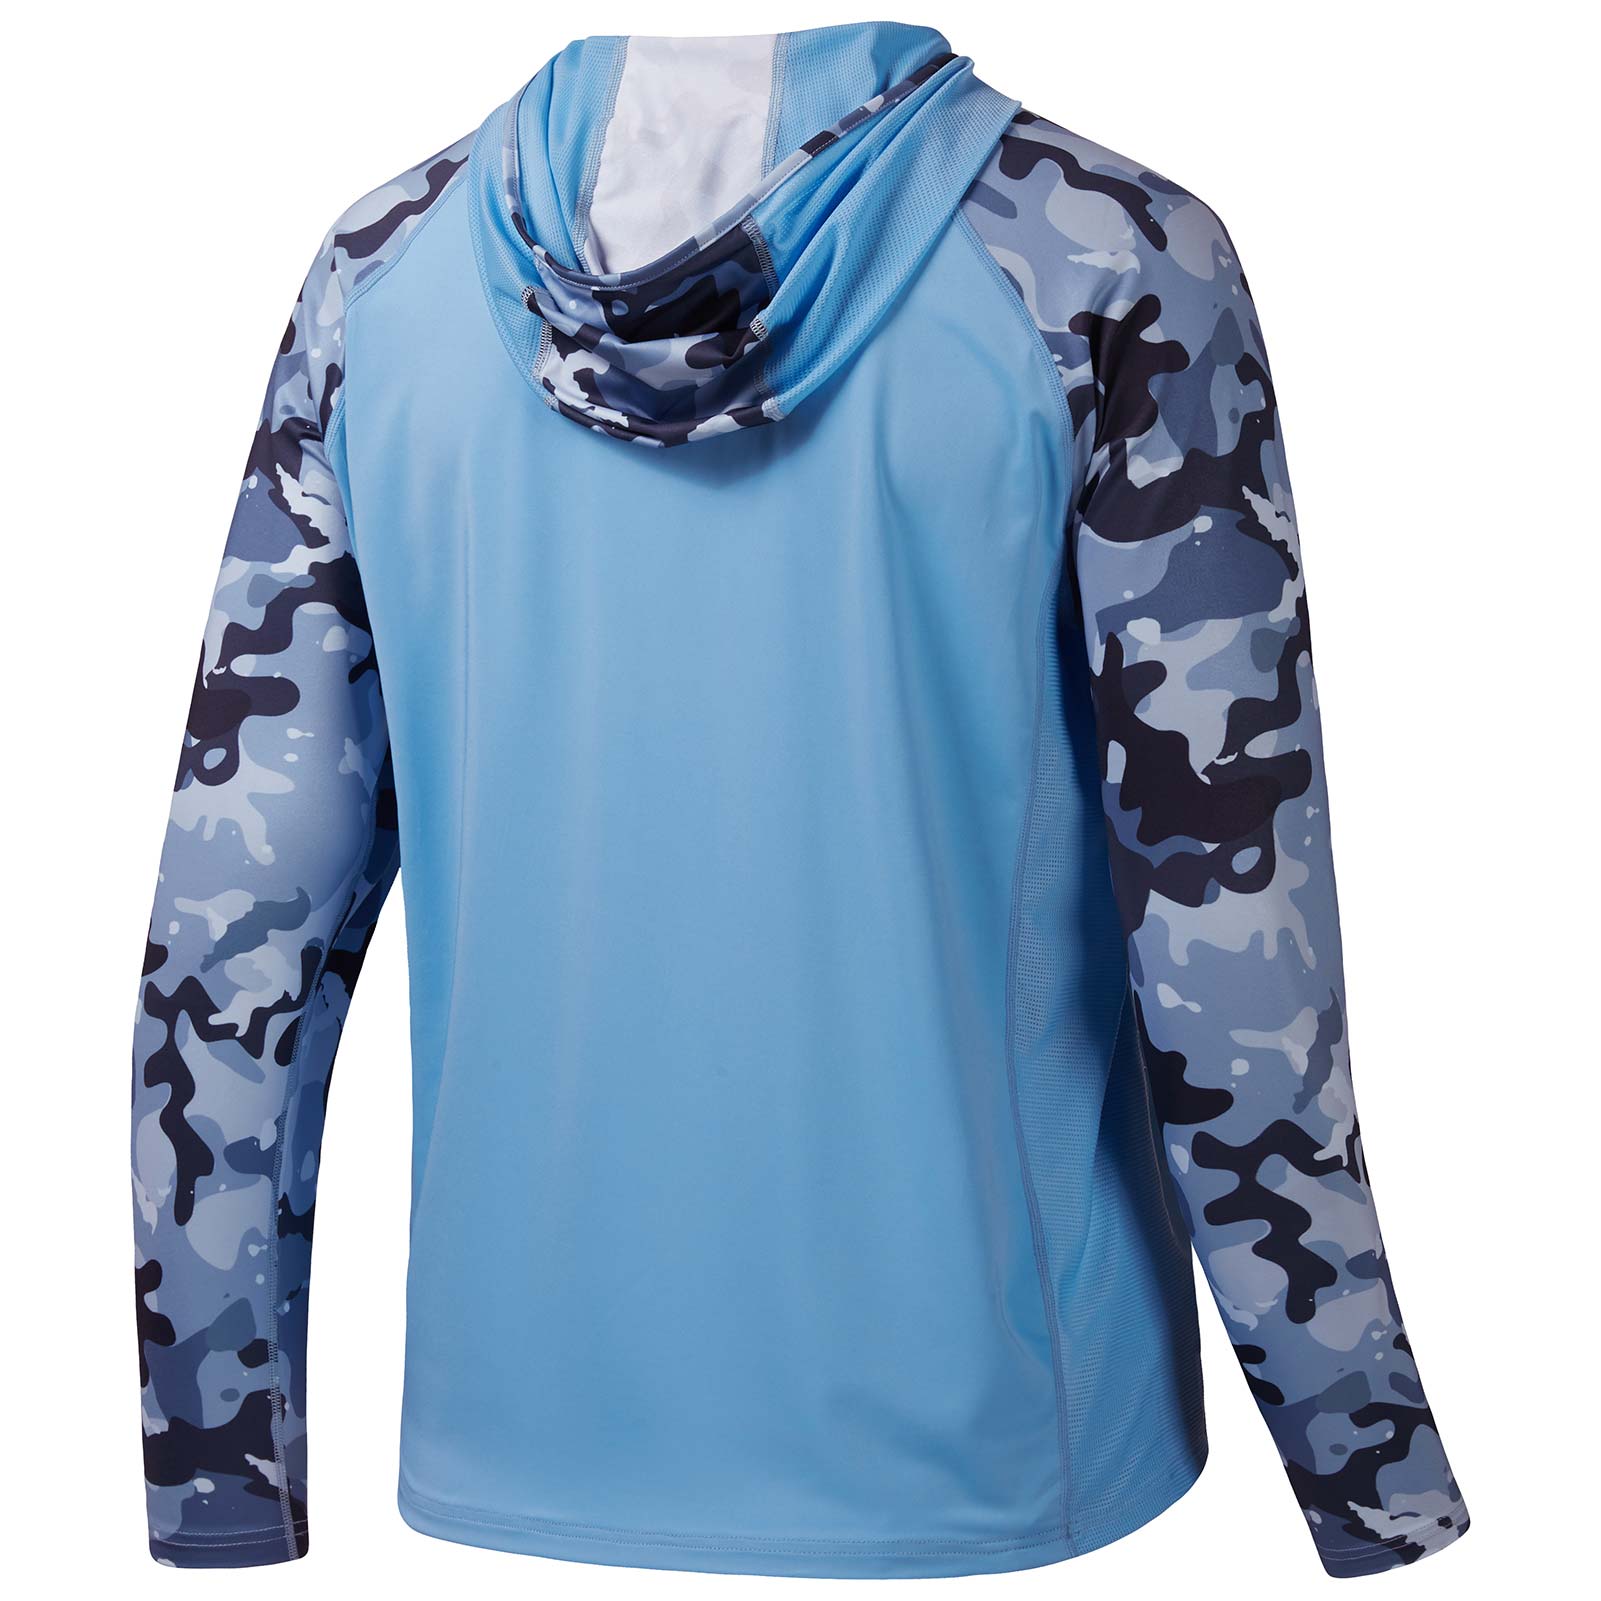 Bassdash Long Sleeve Camo Fishing Shirt | Pescador Fishing Supply Blue Light Grey / L